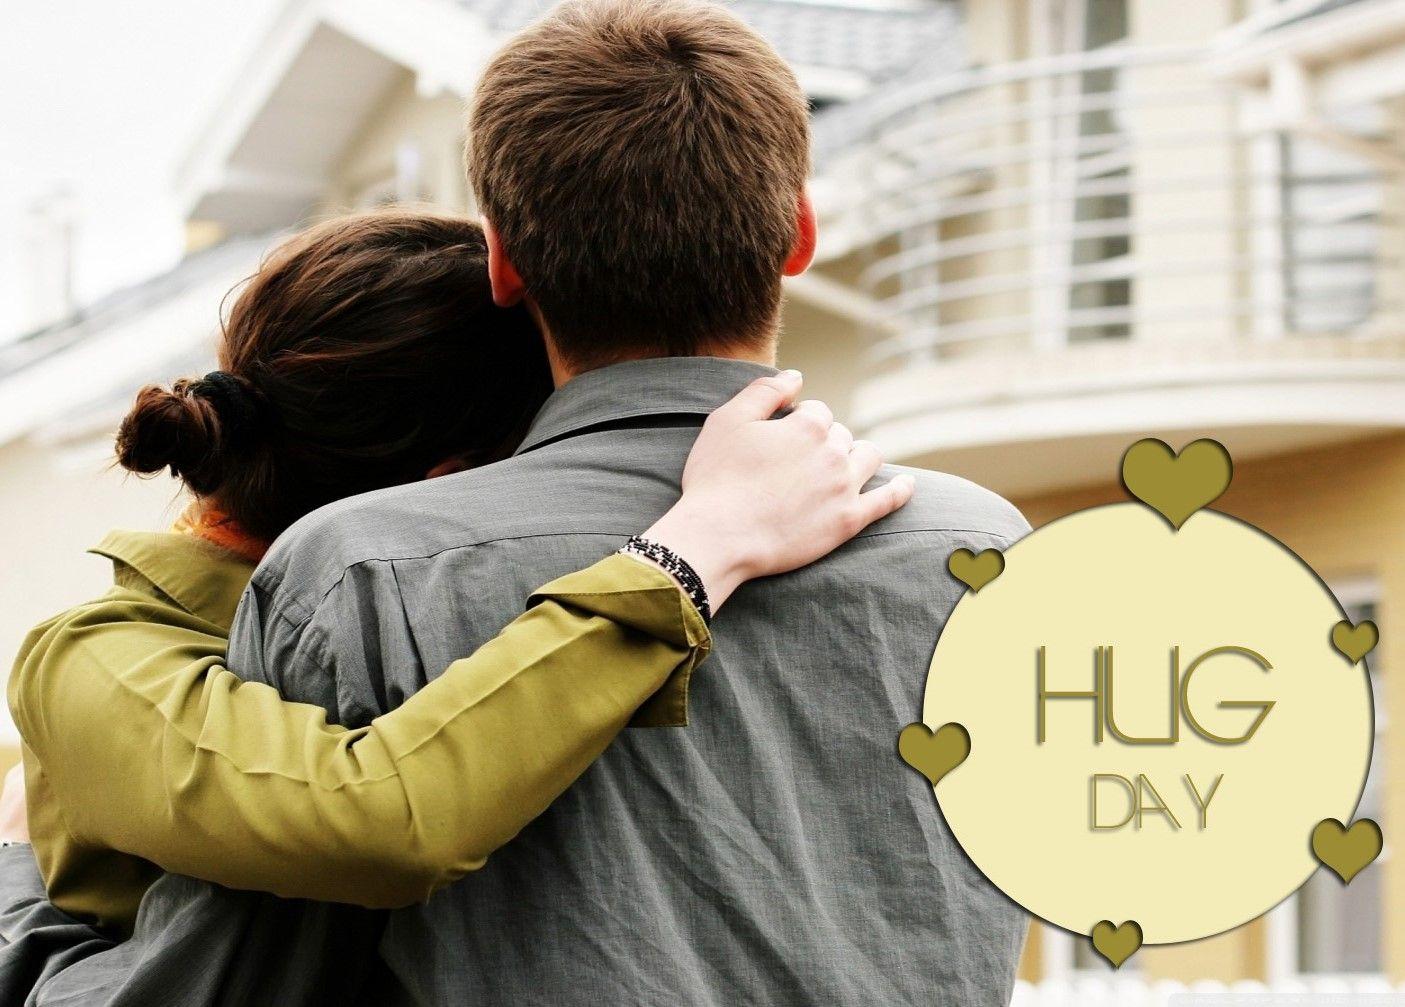 Happy Hug Day Funny Image Whatsapp Fb Dp Timline Cover Pic Photo